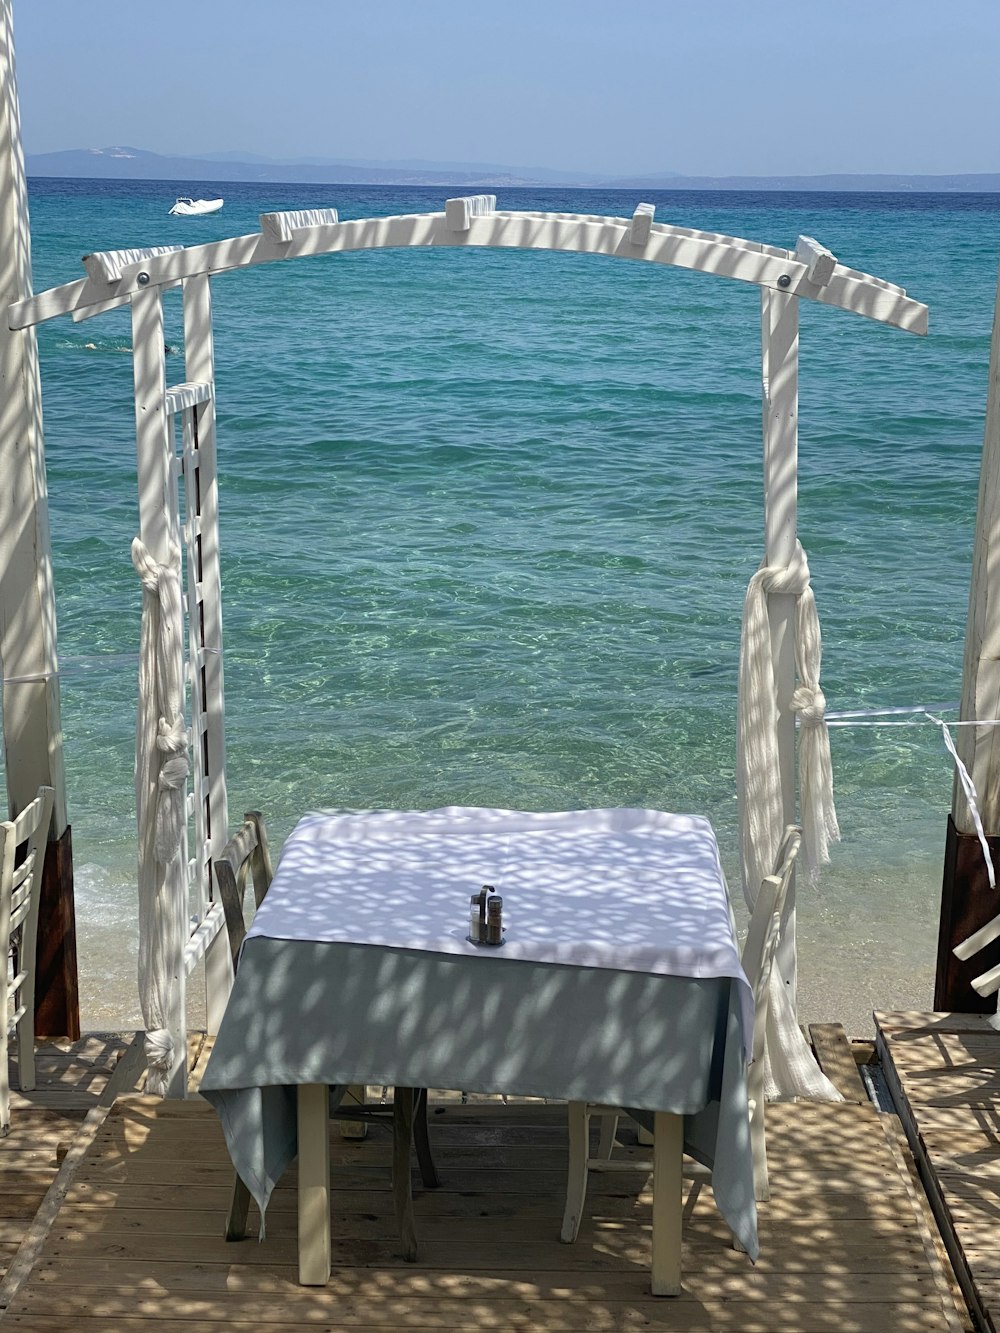 a table and chairs on a beach near the ocean